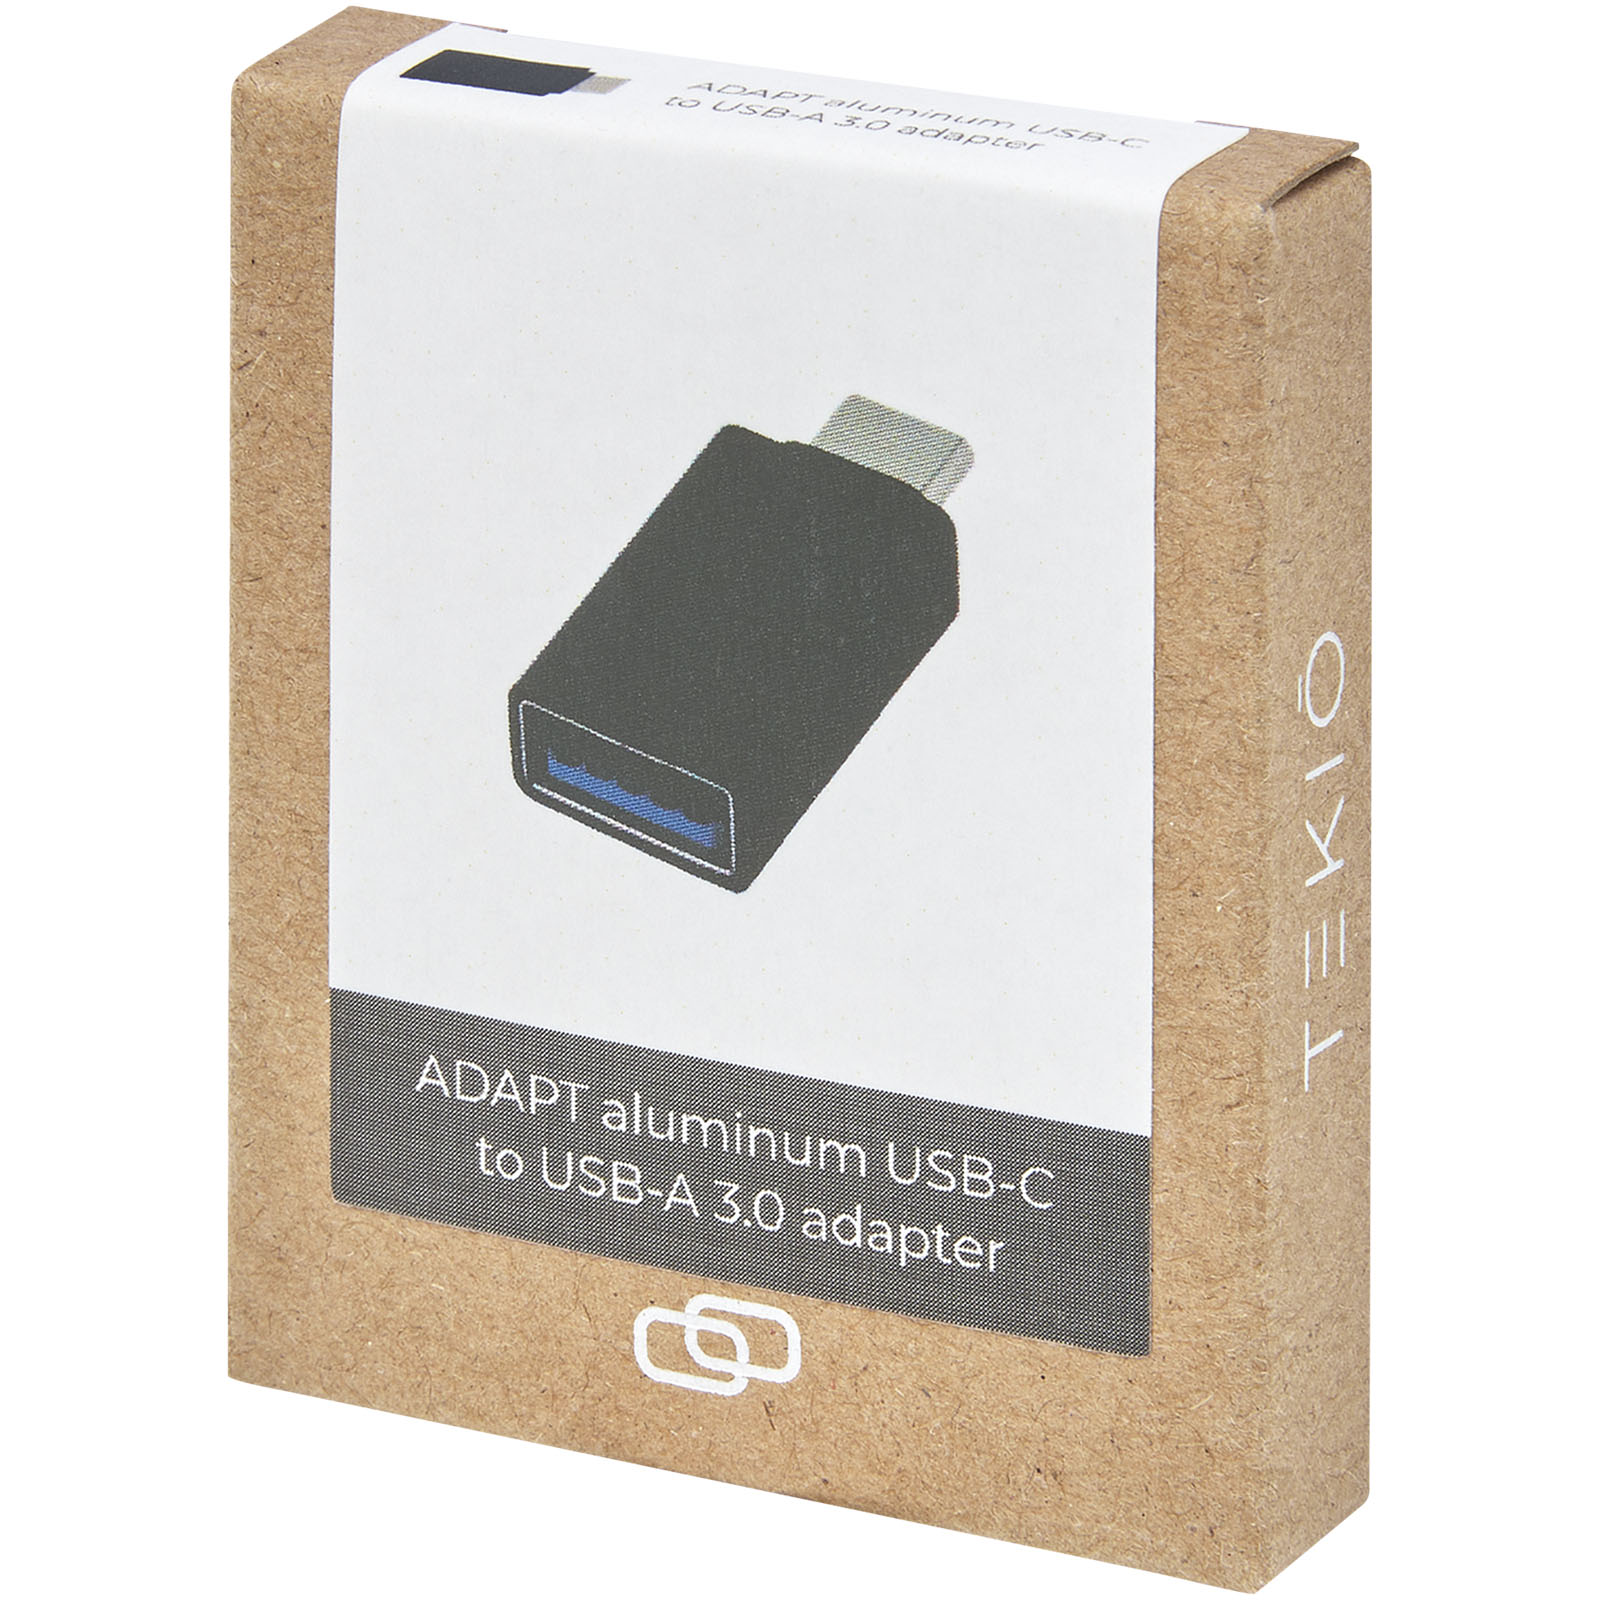 Advertising Computer Accessories - ADAPT aluminum USB-C to USB-A 3.0 adapter - 1